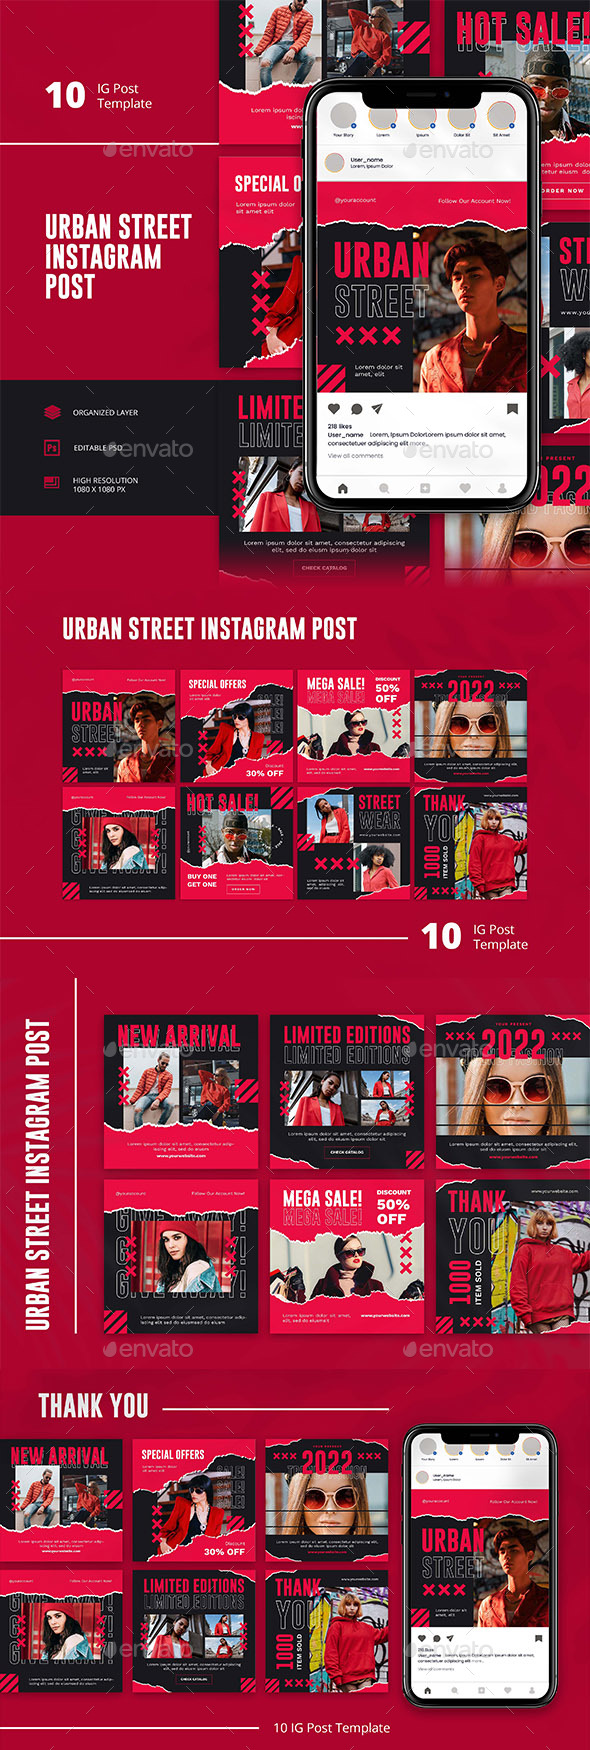 Urban Street Instagram Post Template